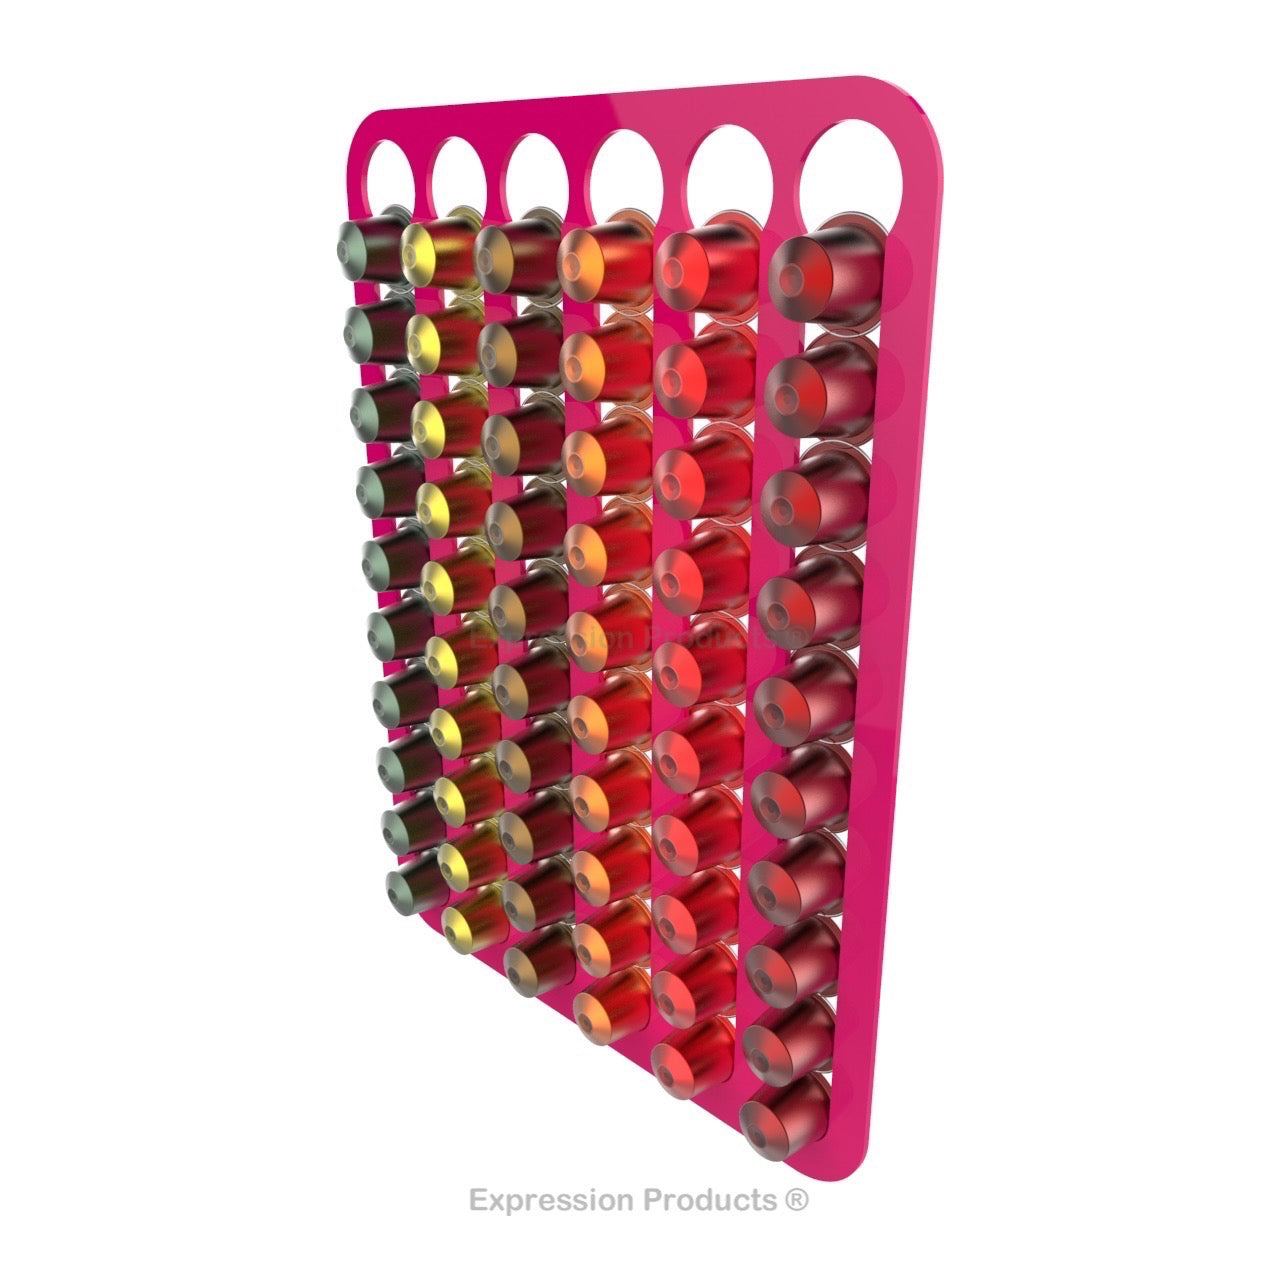 Magnetic Nespresso Original Line coffee pod holder shown in pink holding 60 pods